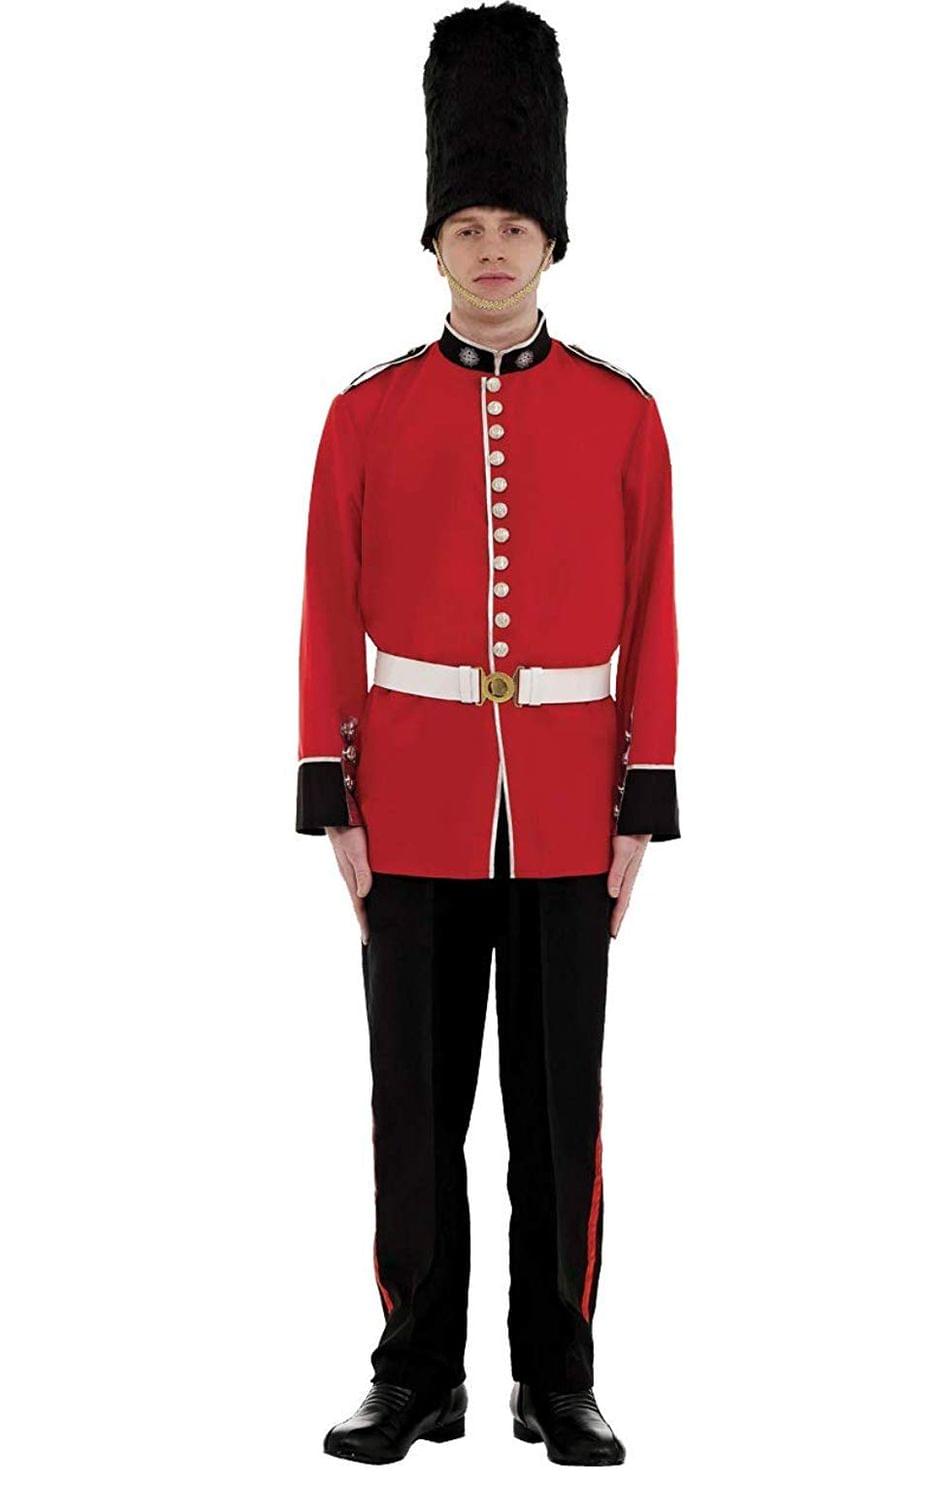 Guardsman Adult Costume